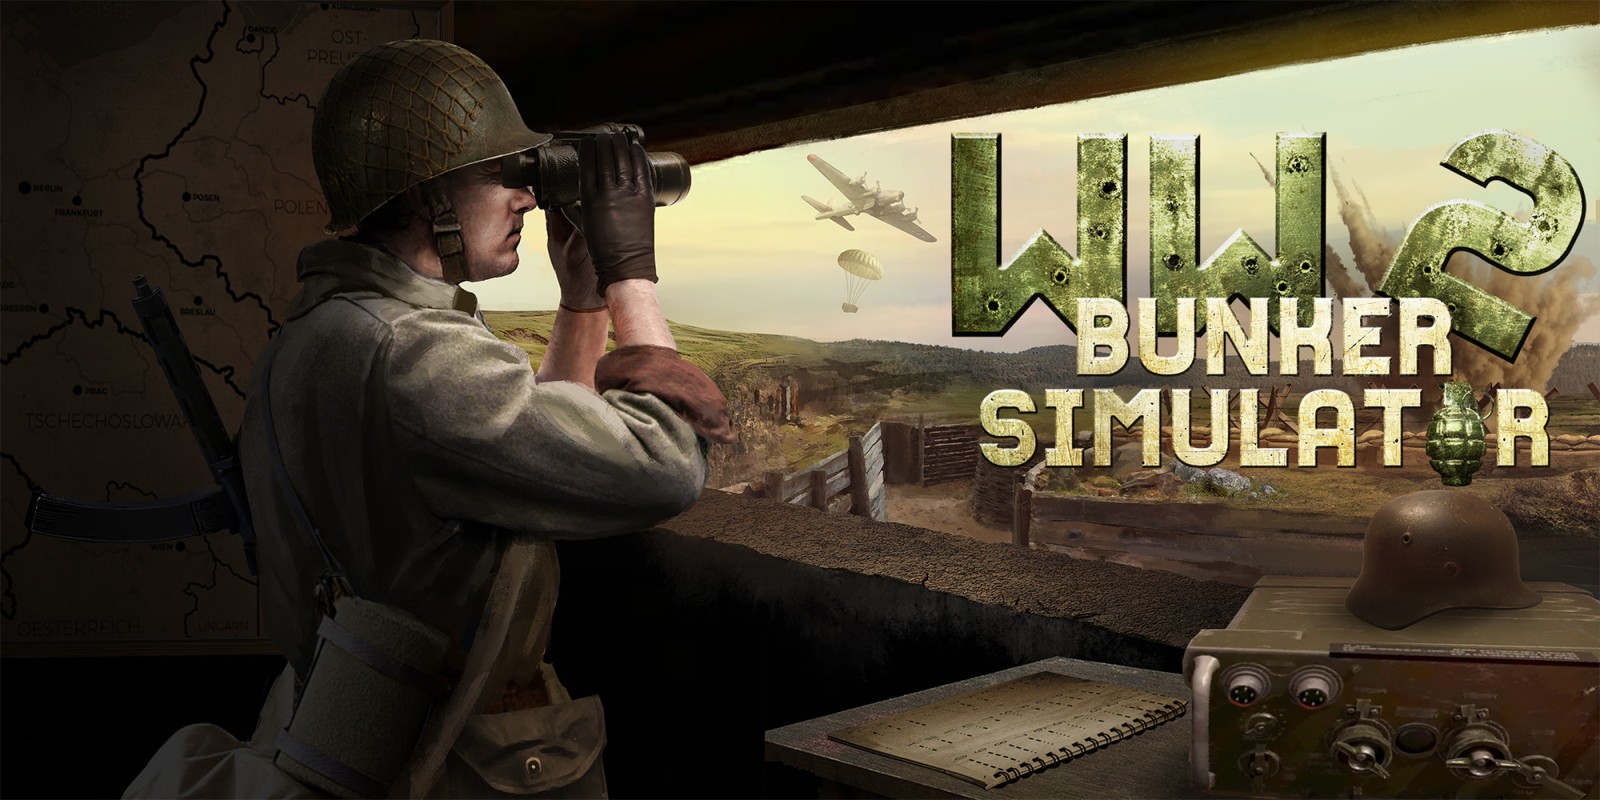 nsz，中文，下载，二战地堡模拟器，WW2 Bunker Simulatorm